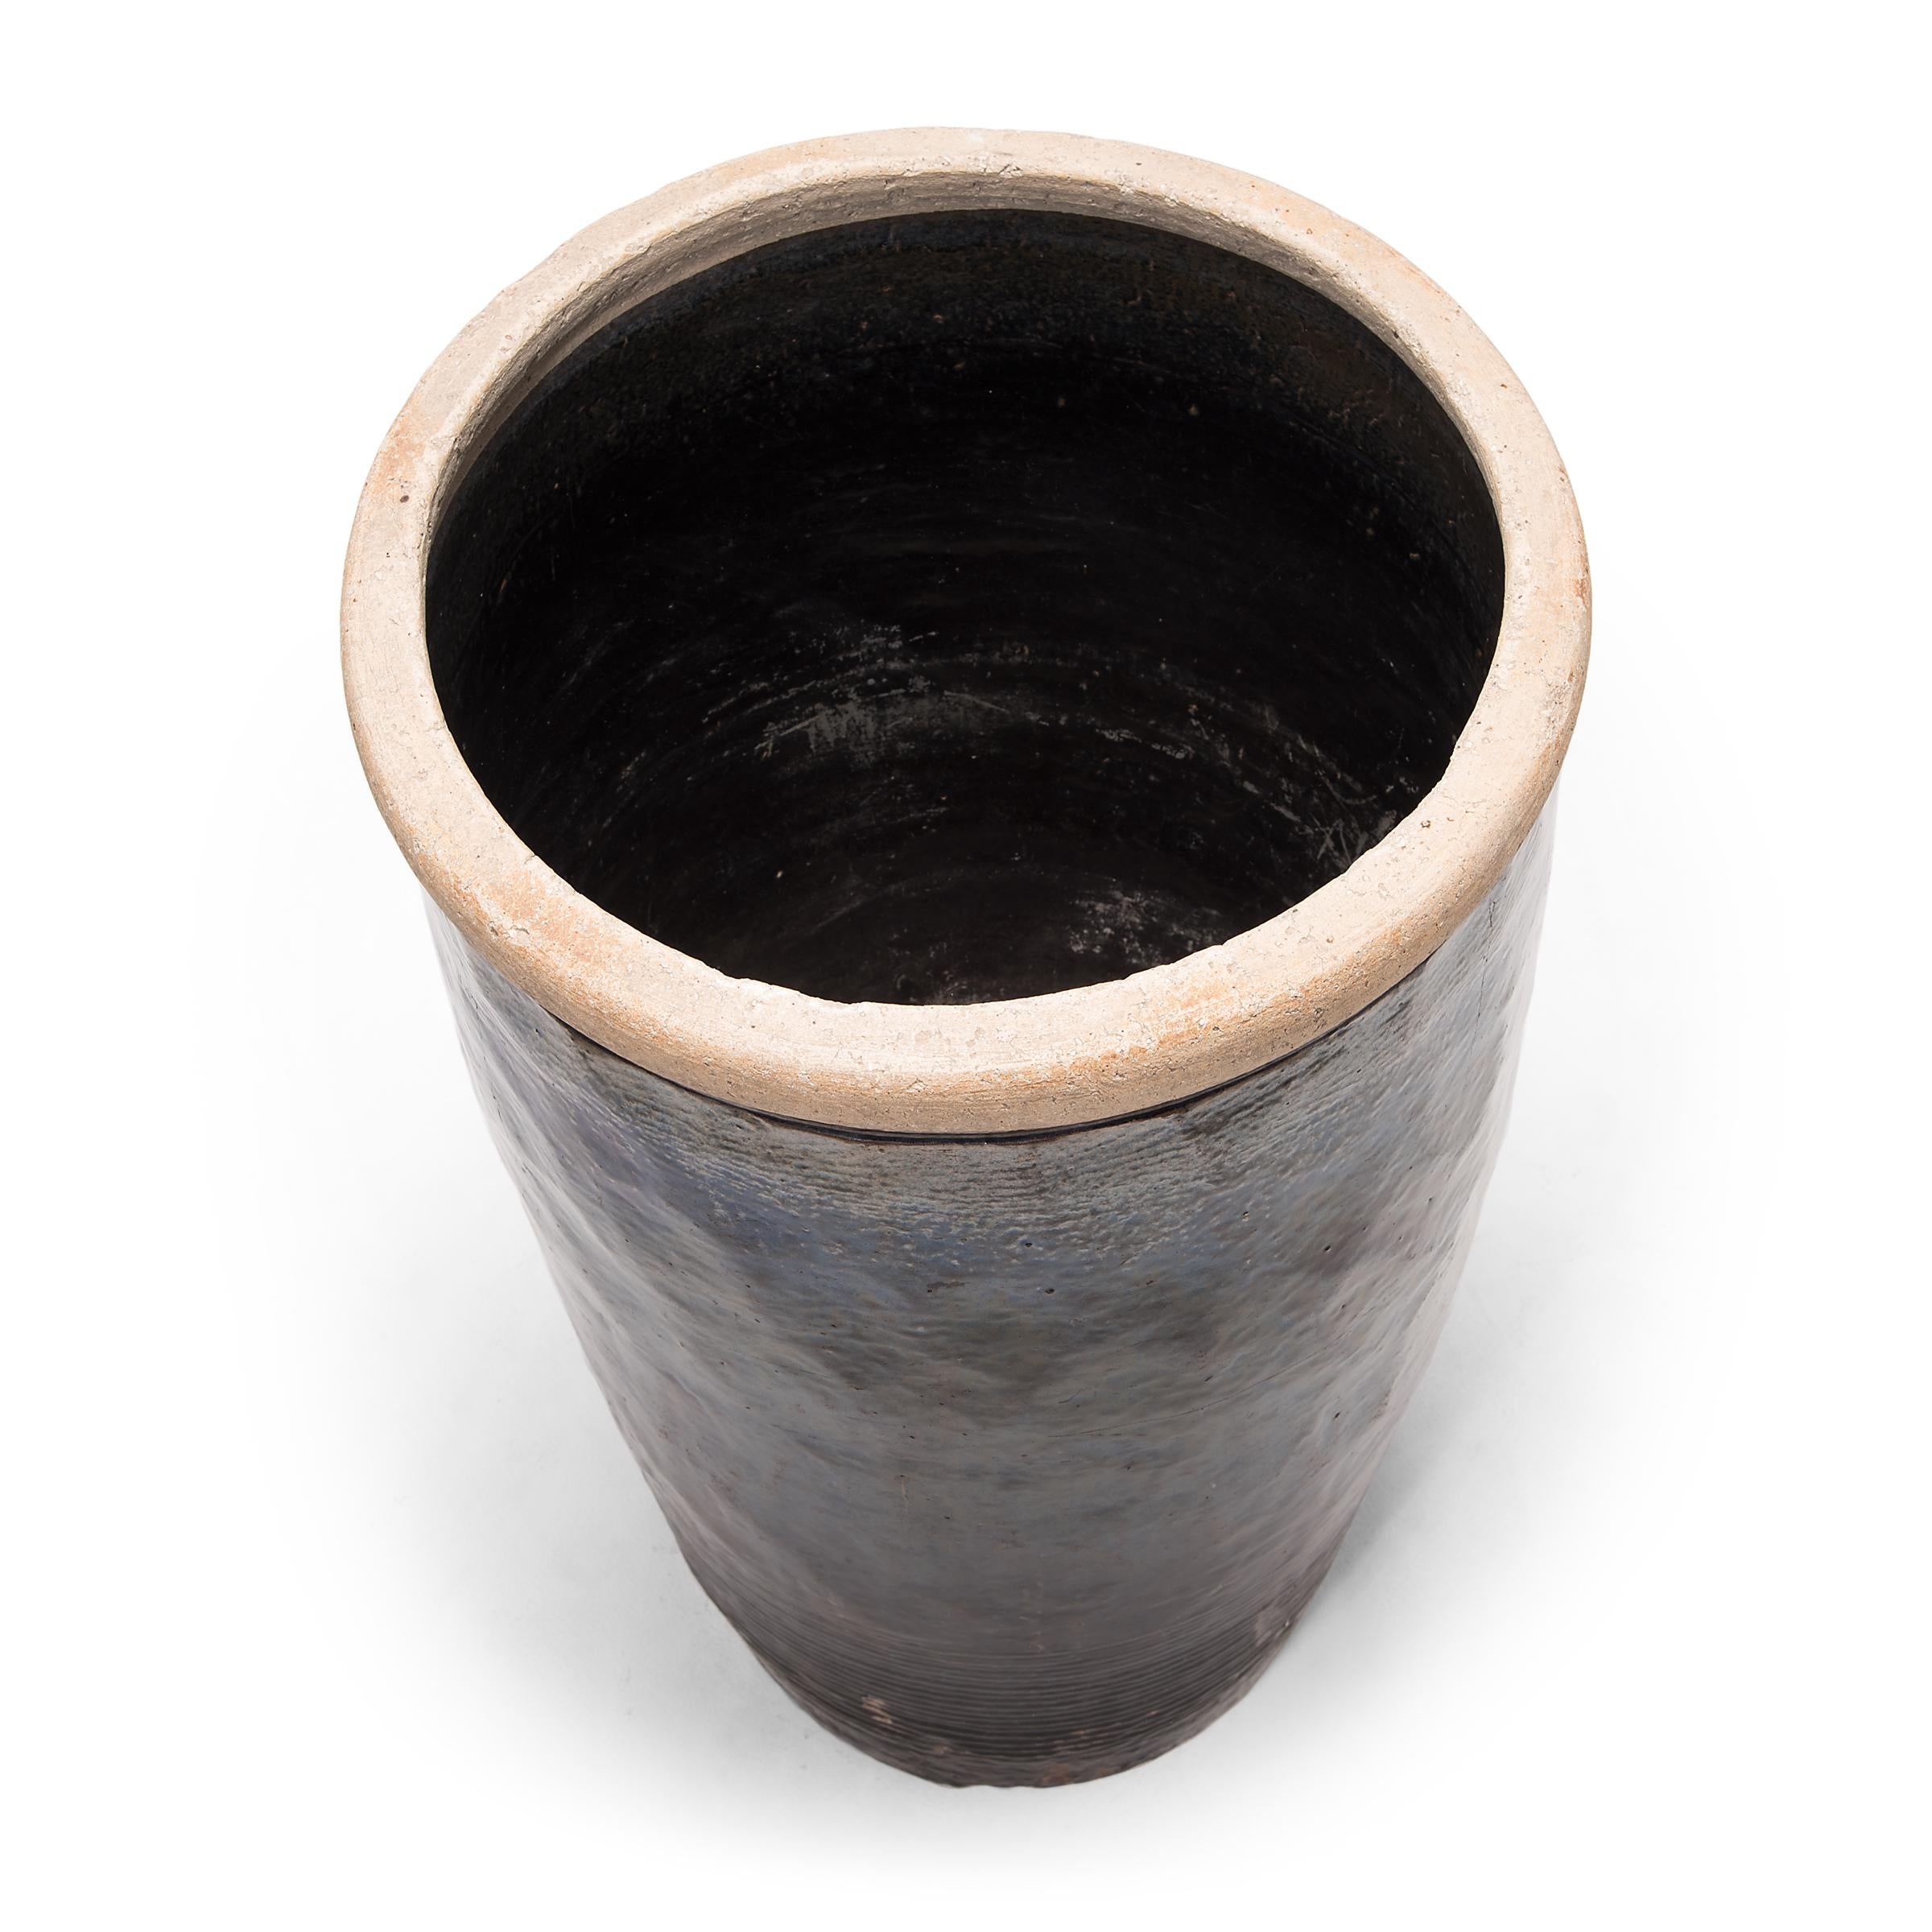 Glazed Chinese Shanxi Vinegar Pot, c. 1900